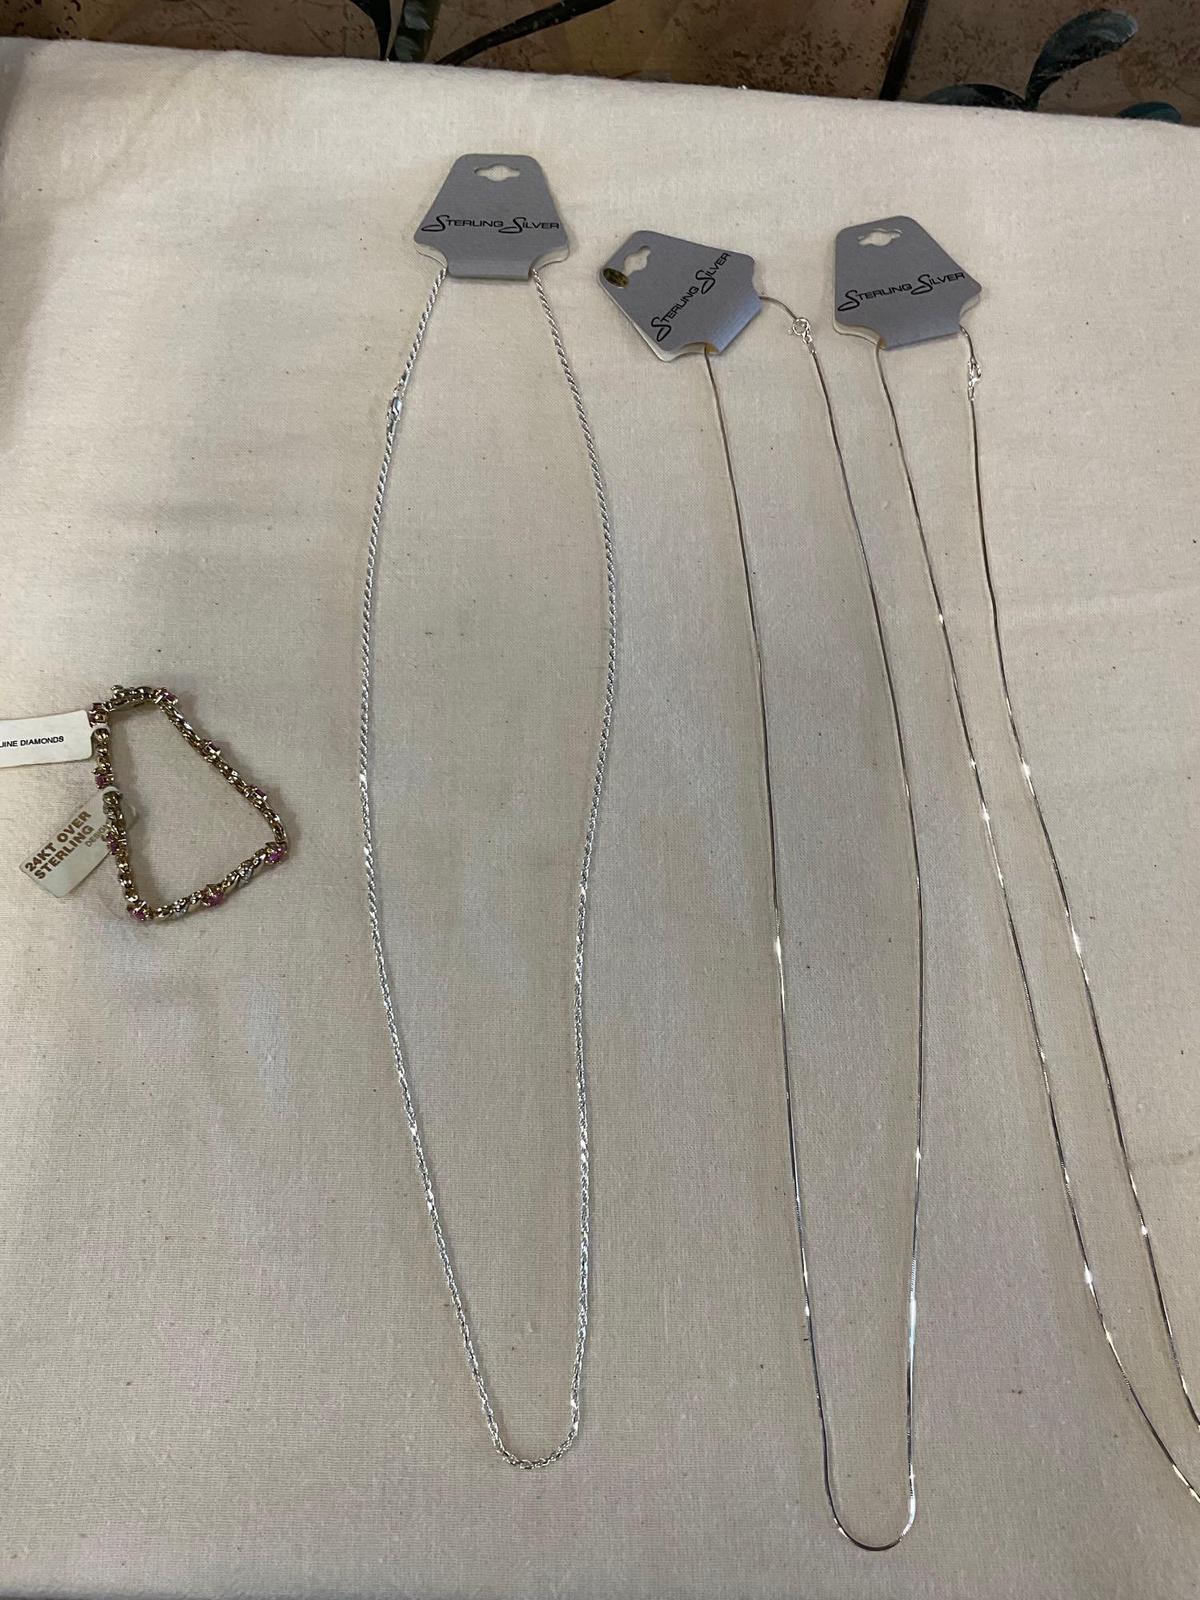 New Costume jewelry. 14? necklaces & Bracelet. 4 pieces